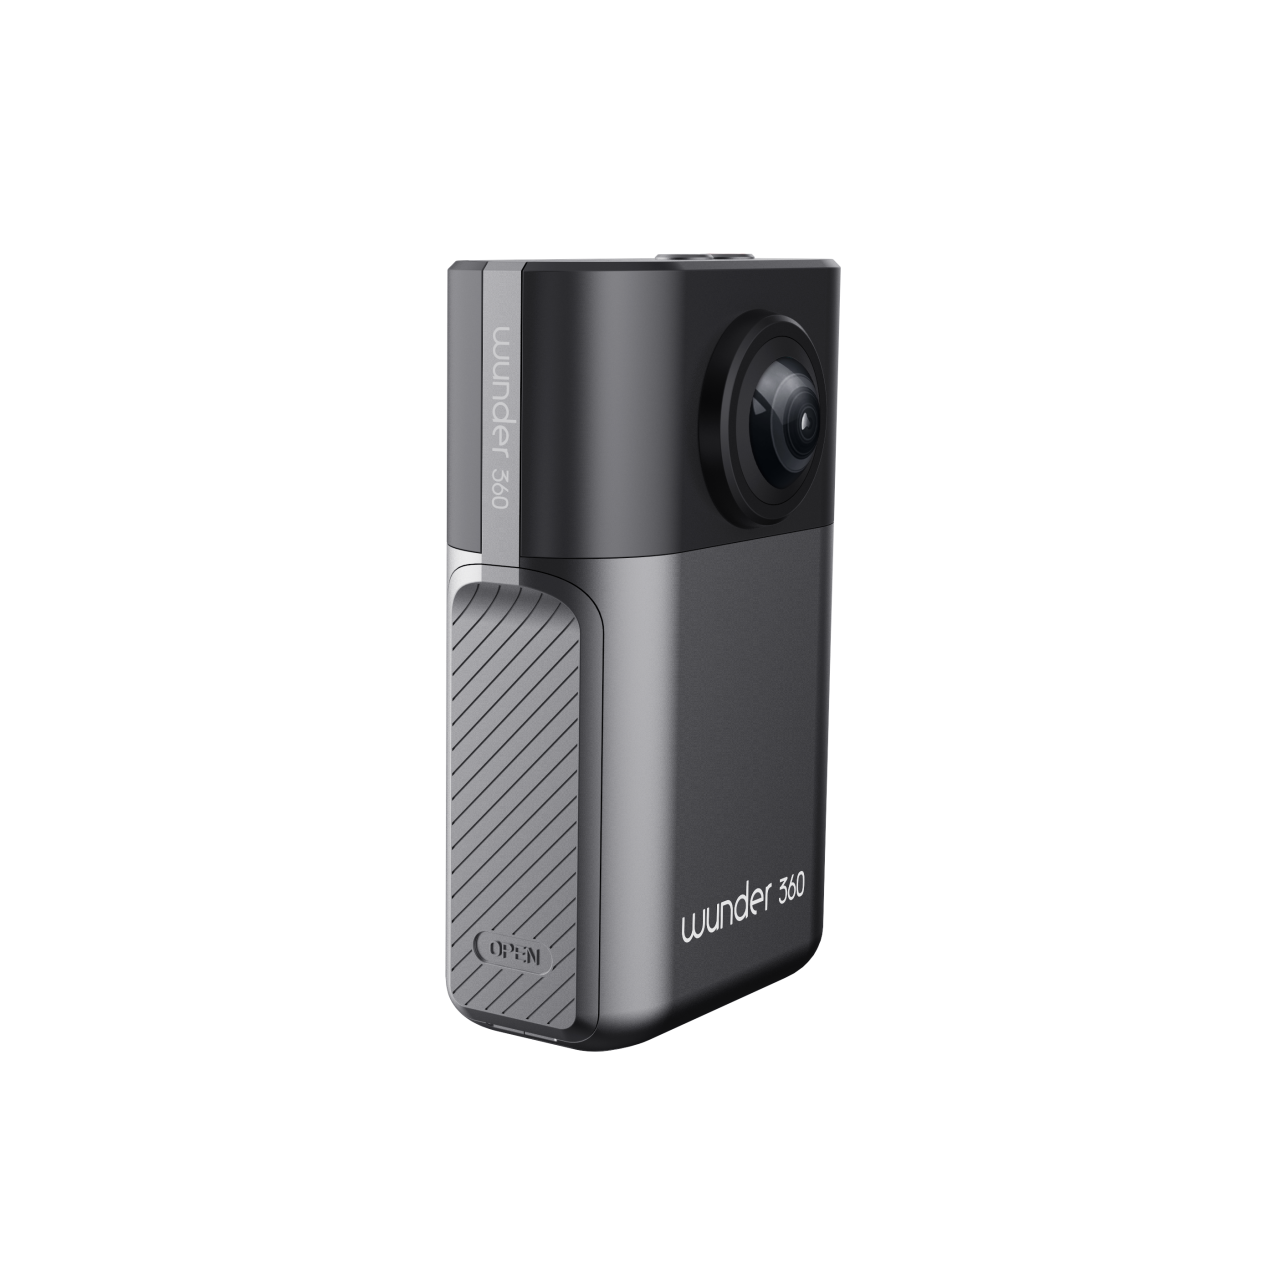 Evomotion Wunder360 S1 Artificial Intelligence Camera